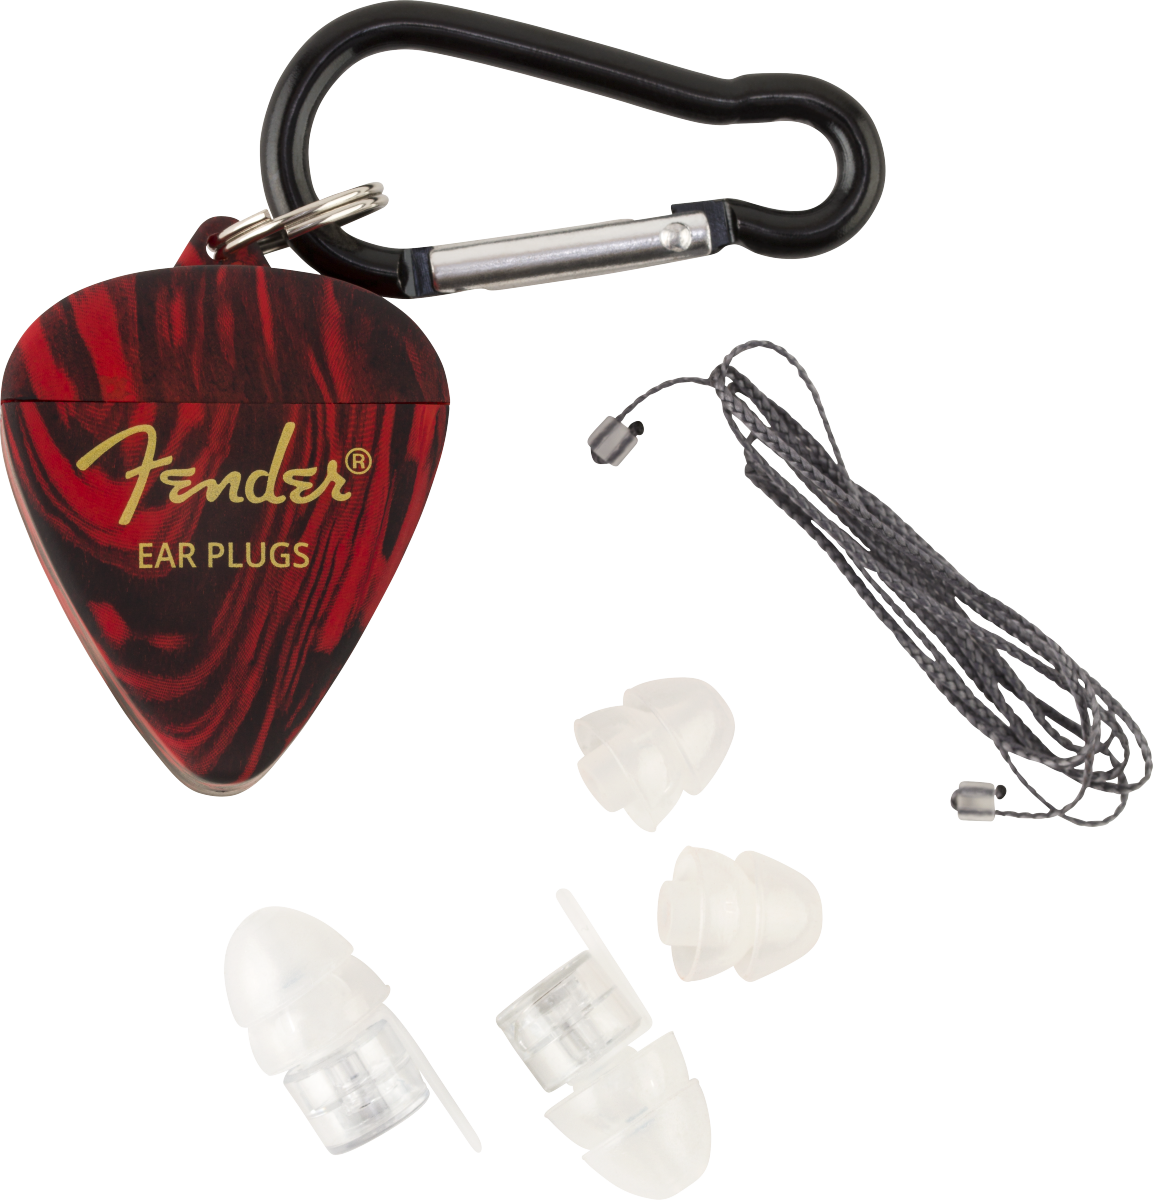 Fender Professional Ear Plugs